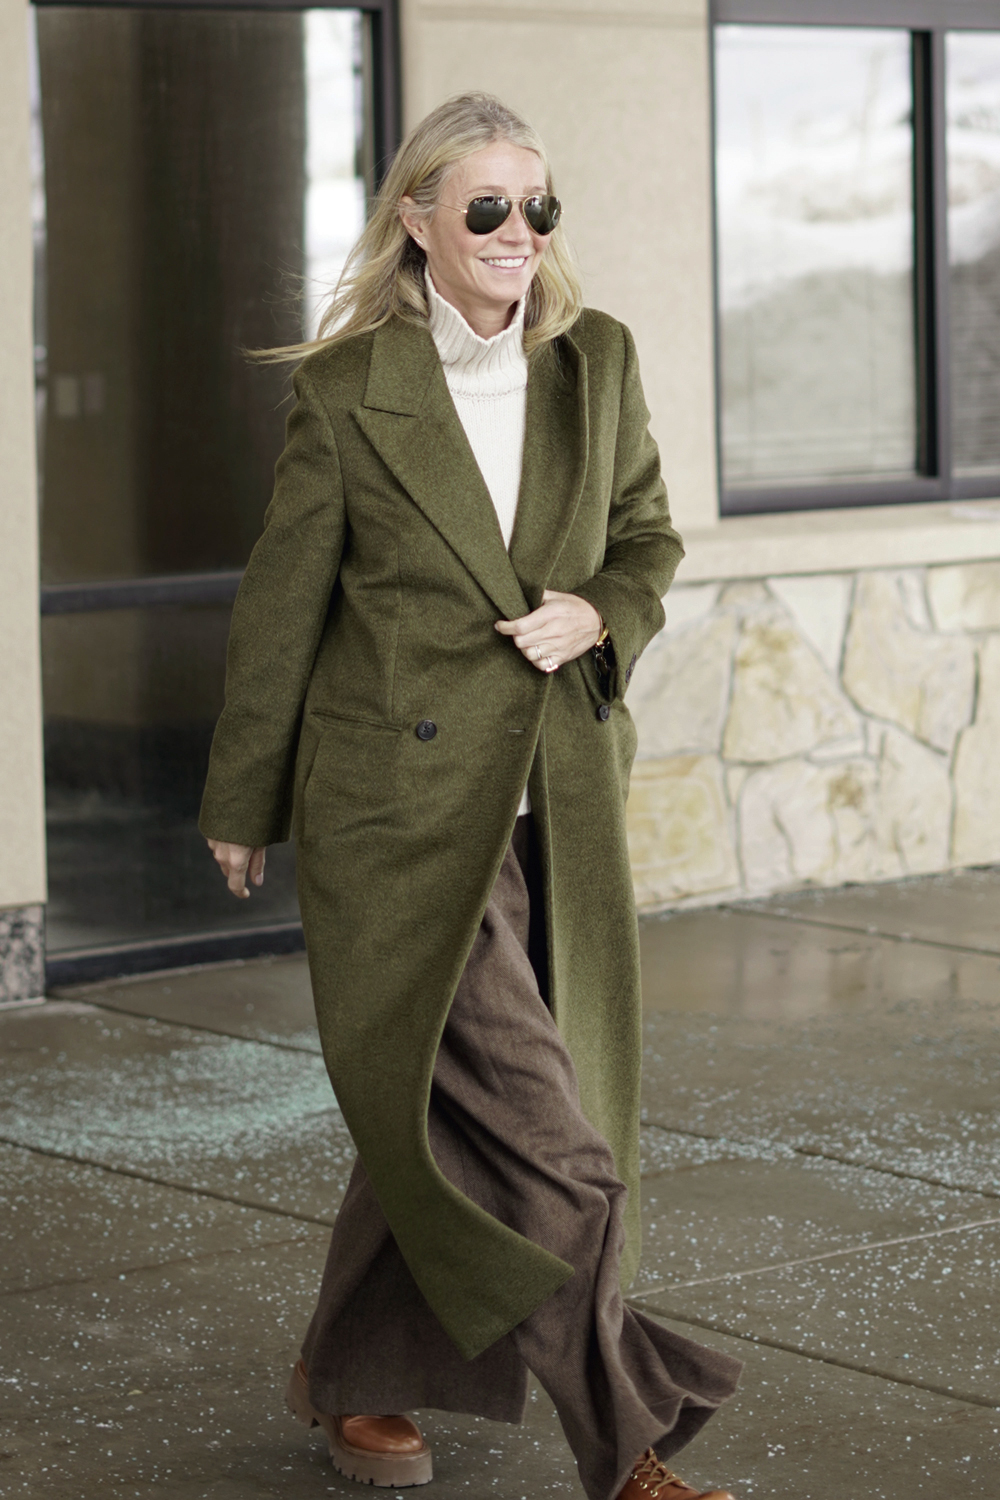 CENA ROUBADA - Gwyneth Paltrow no tribunal: looks ganharam o noticiário